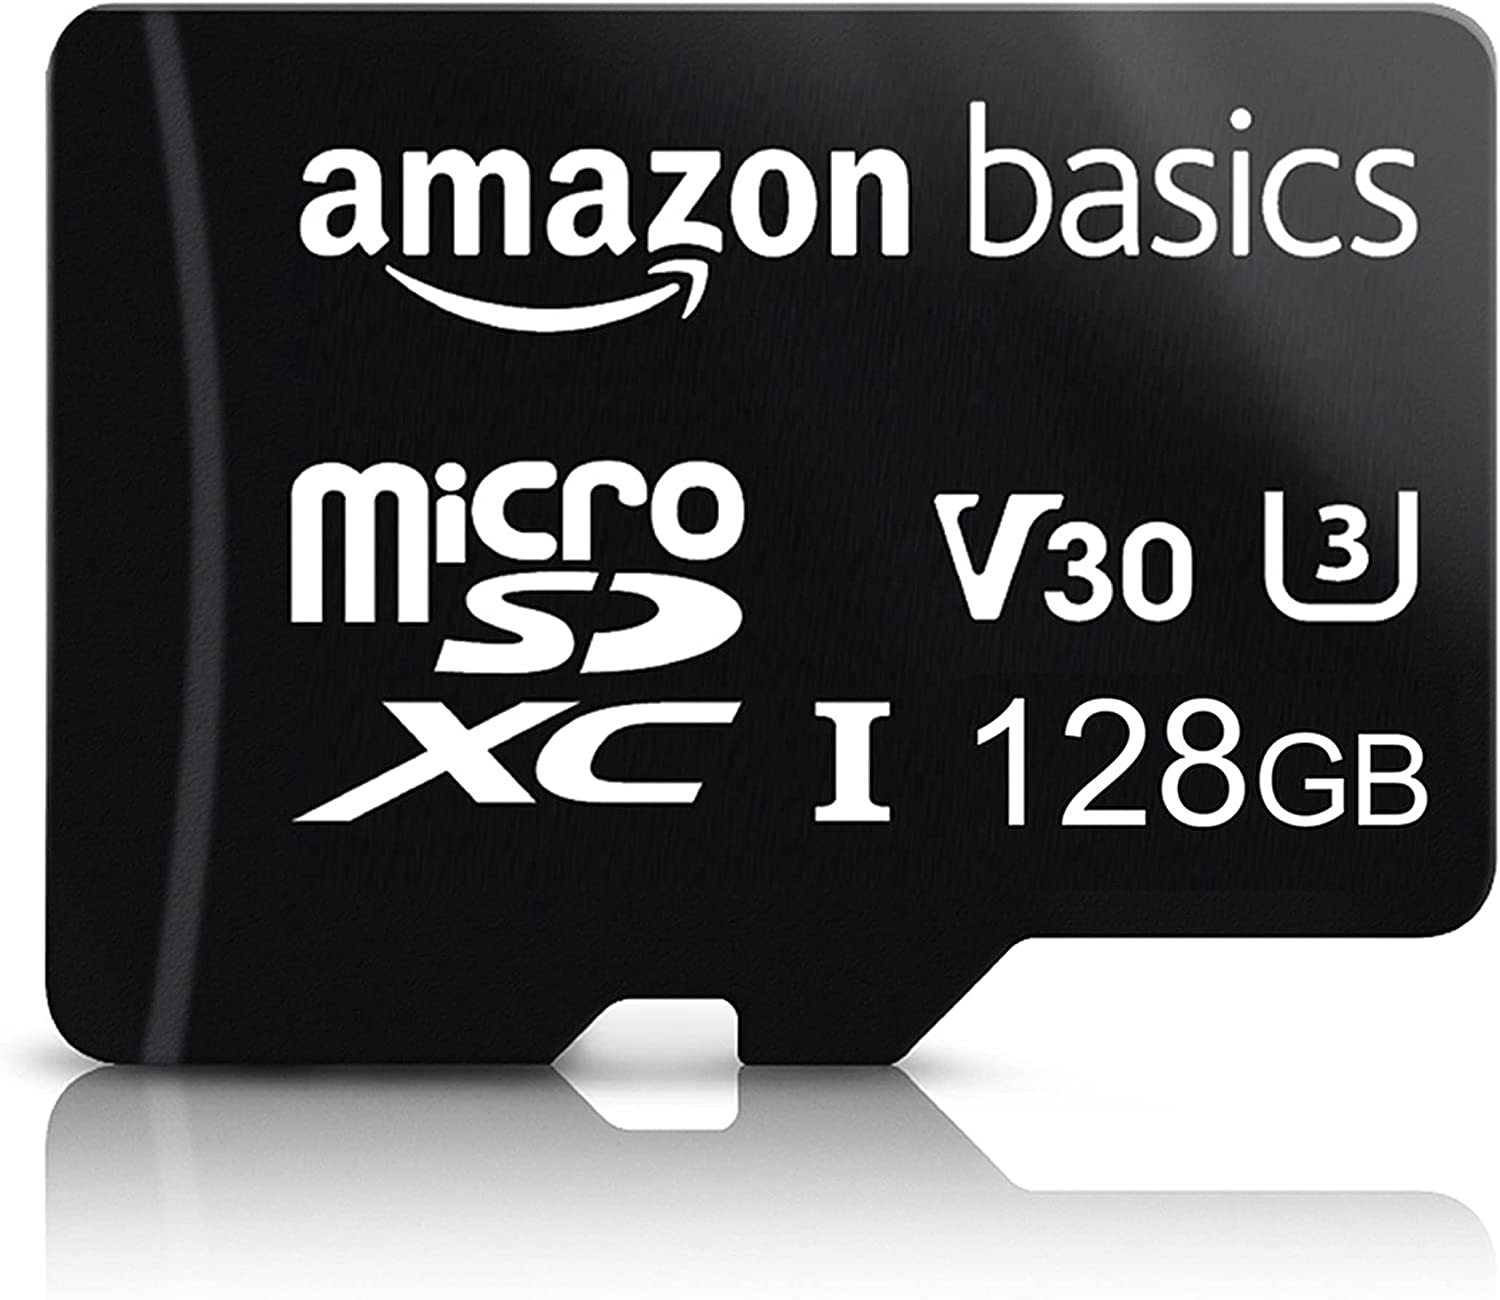 Amazon Basics Micro SDXC 128GB card with SD adapter